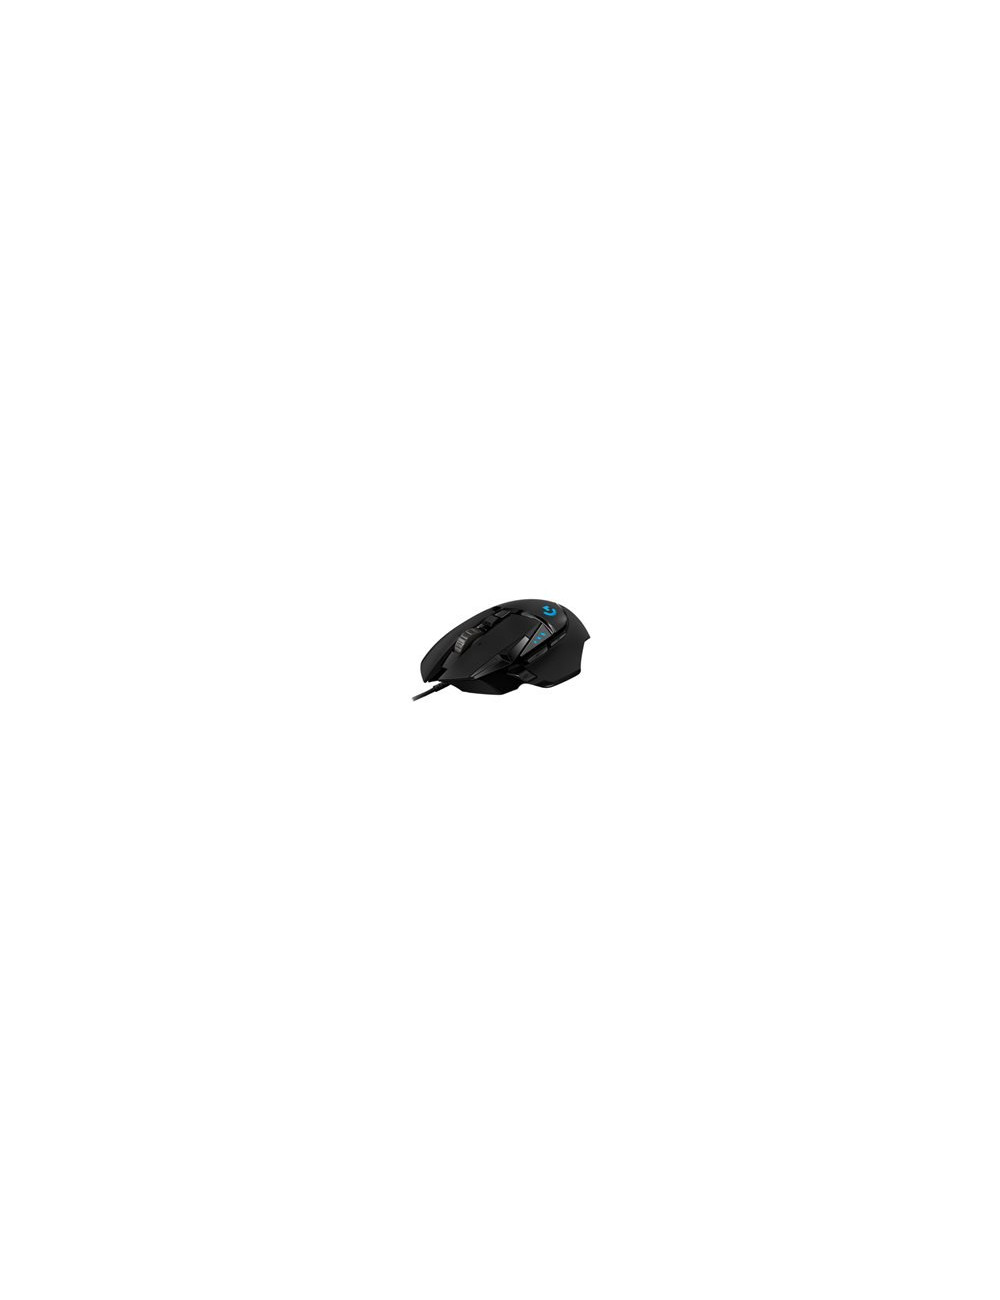 LOGI G502 HERO Gaming Mouse EER2